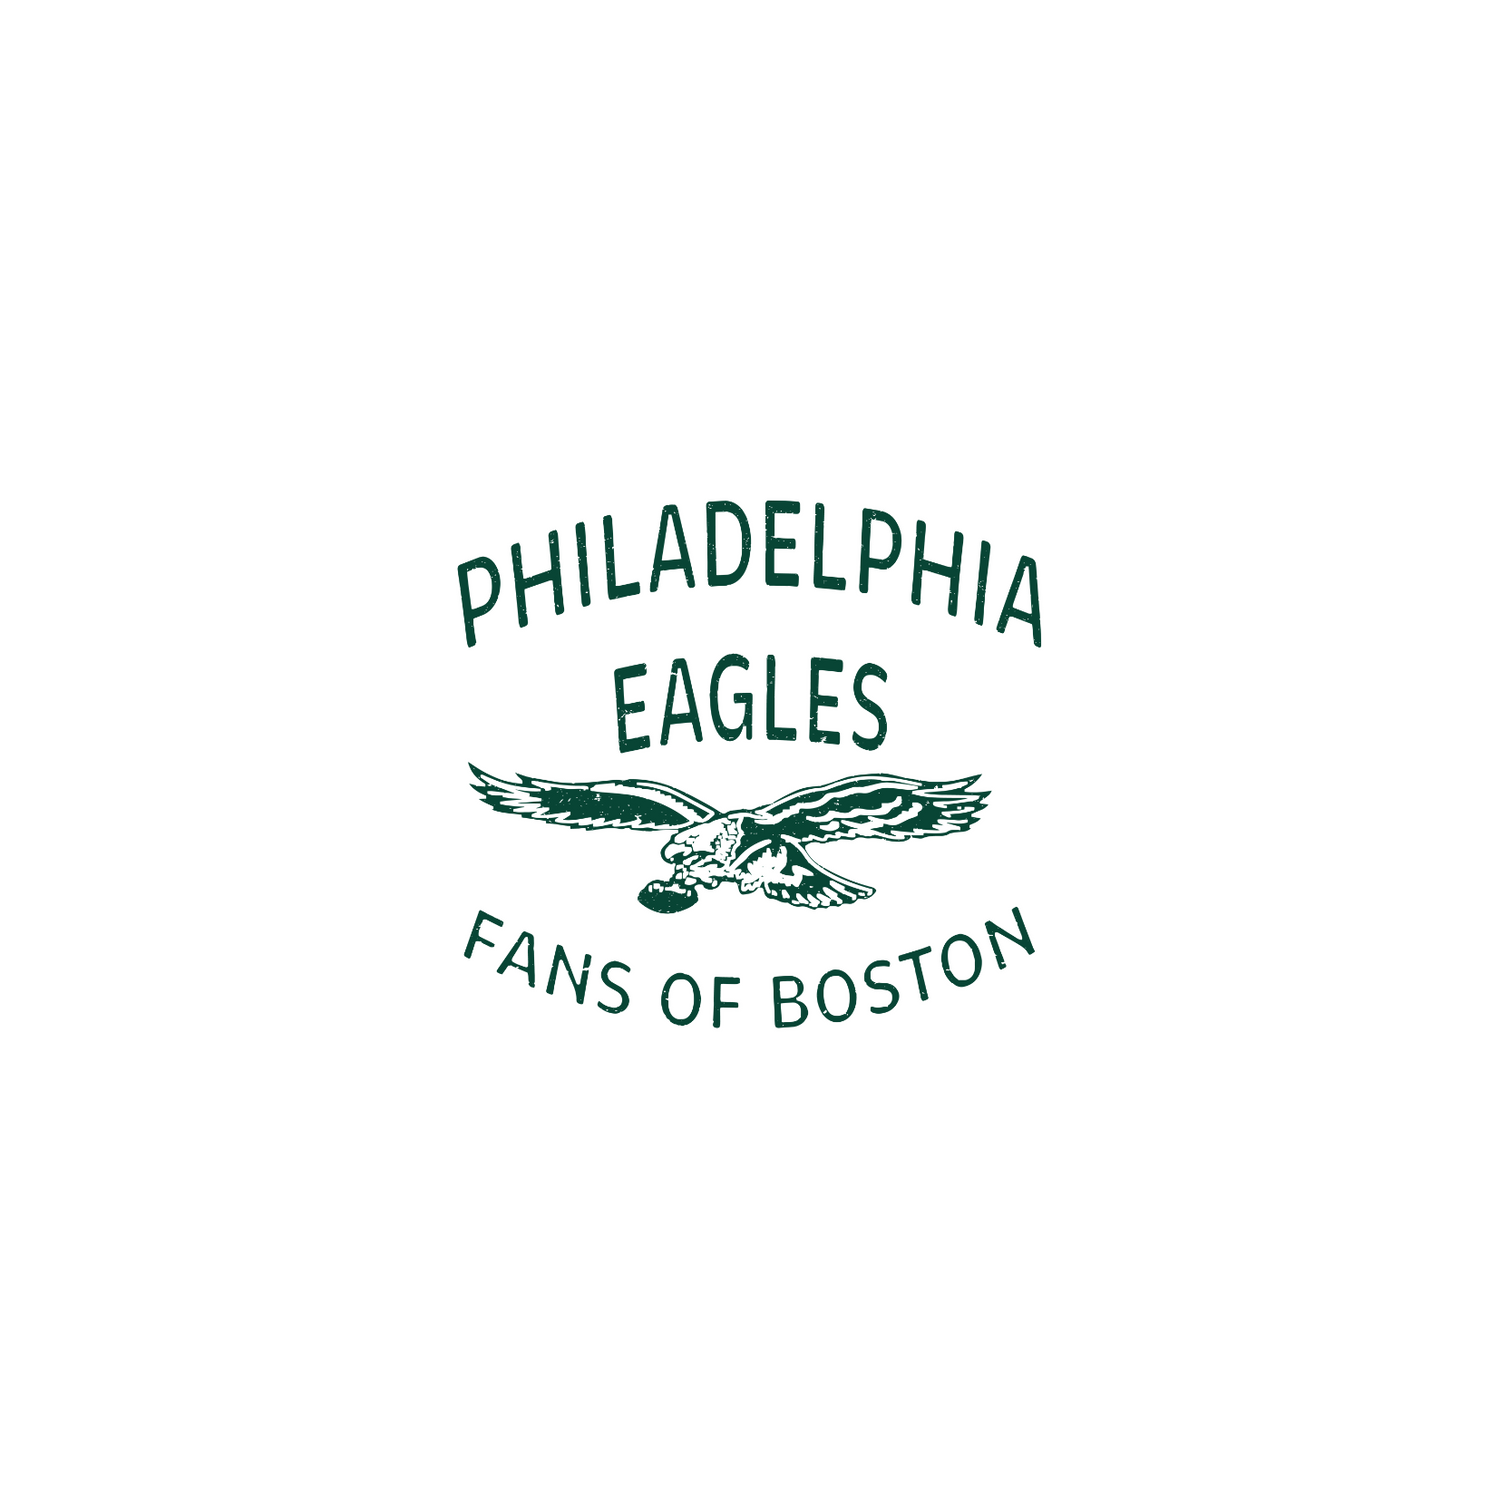 Philadelphia Eagles Fans of Boston